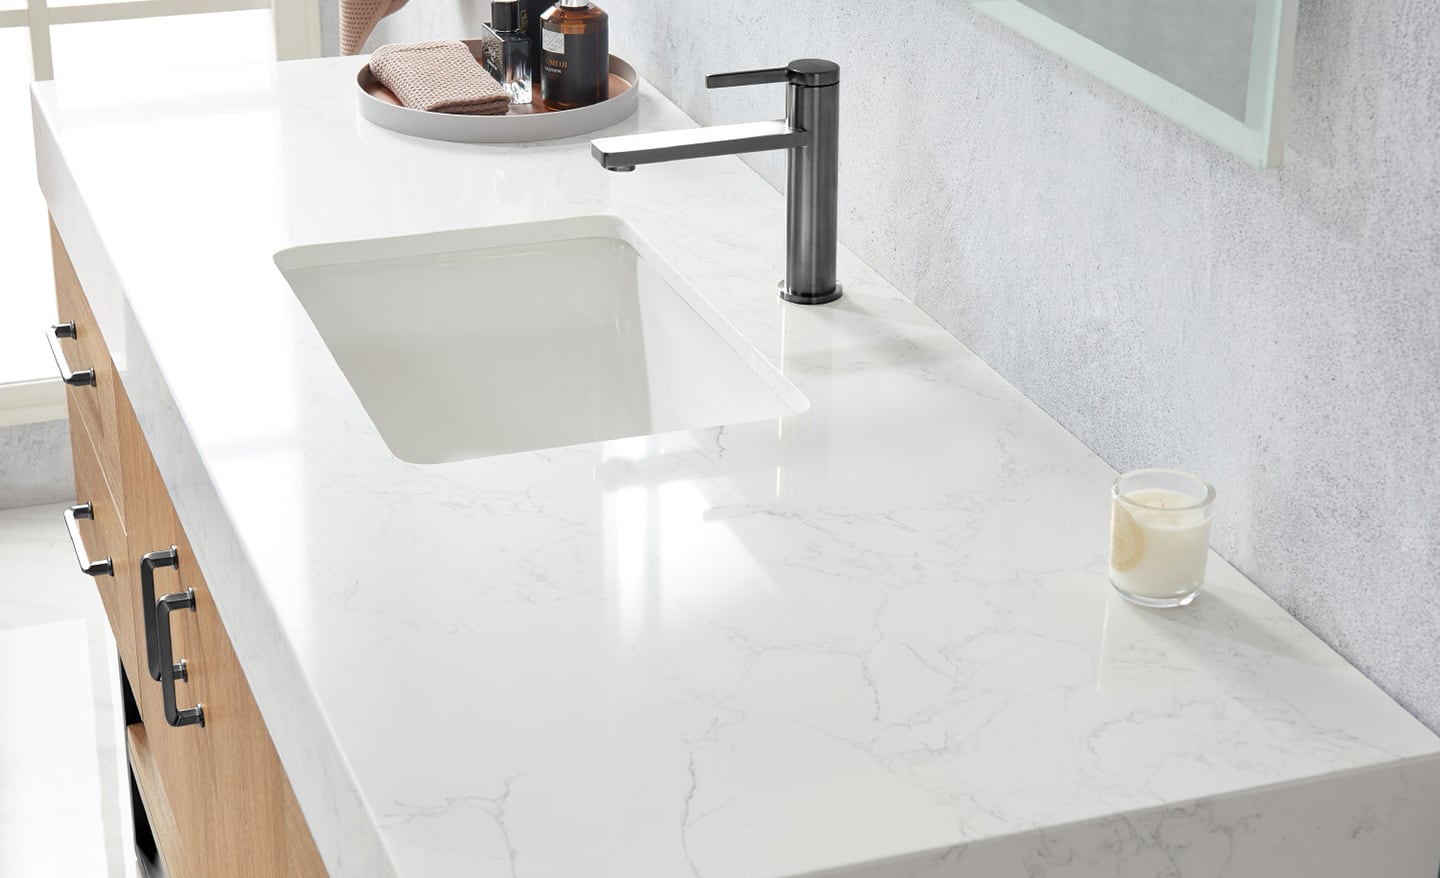 An engineered stone bathroom vanity countertop